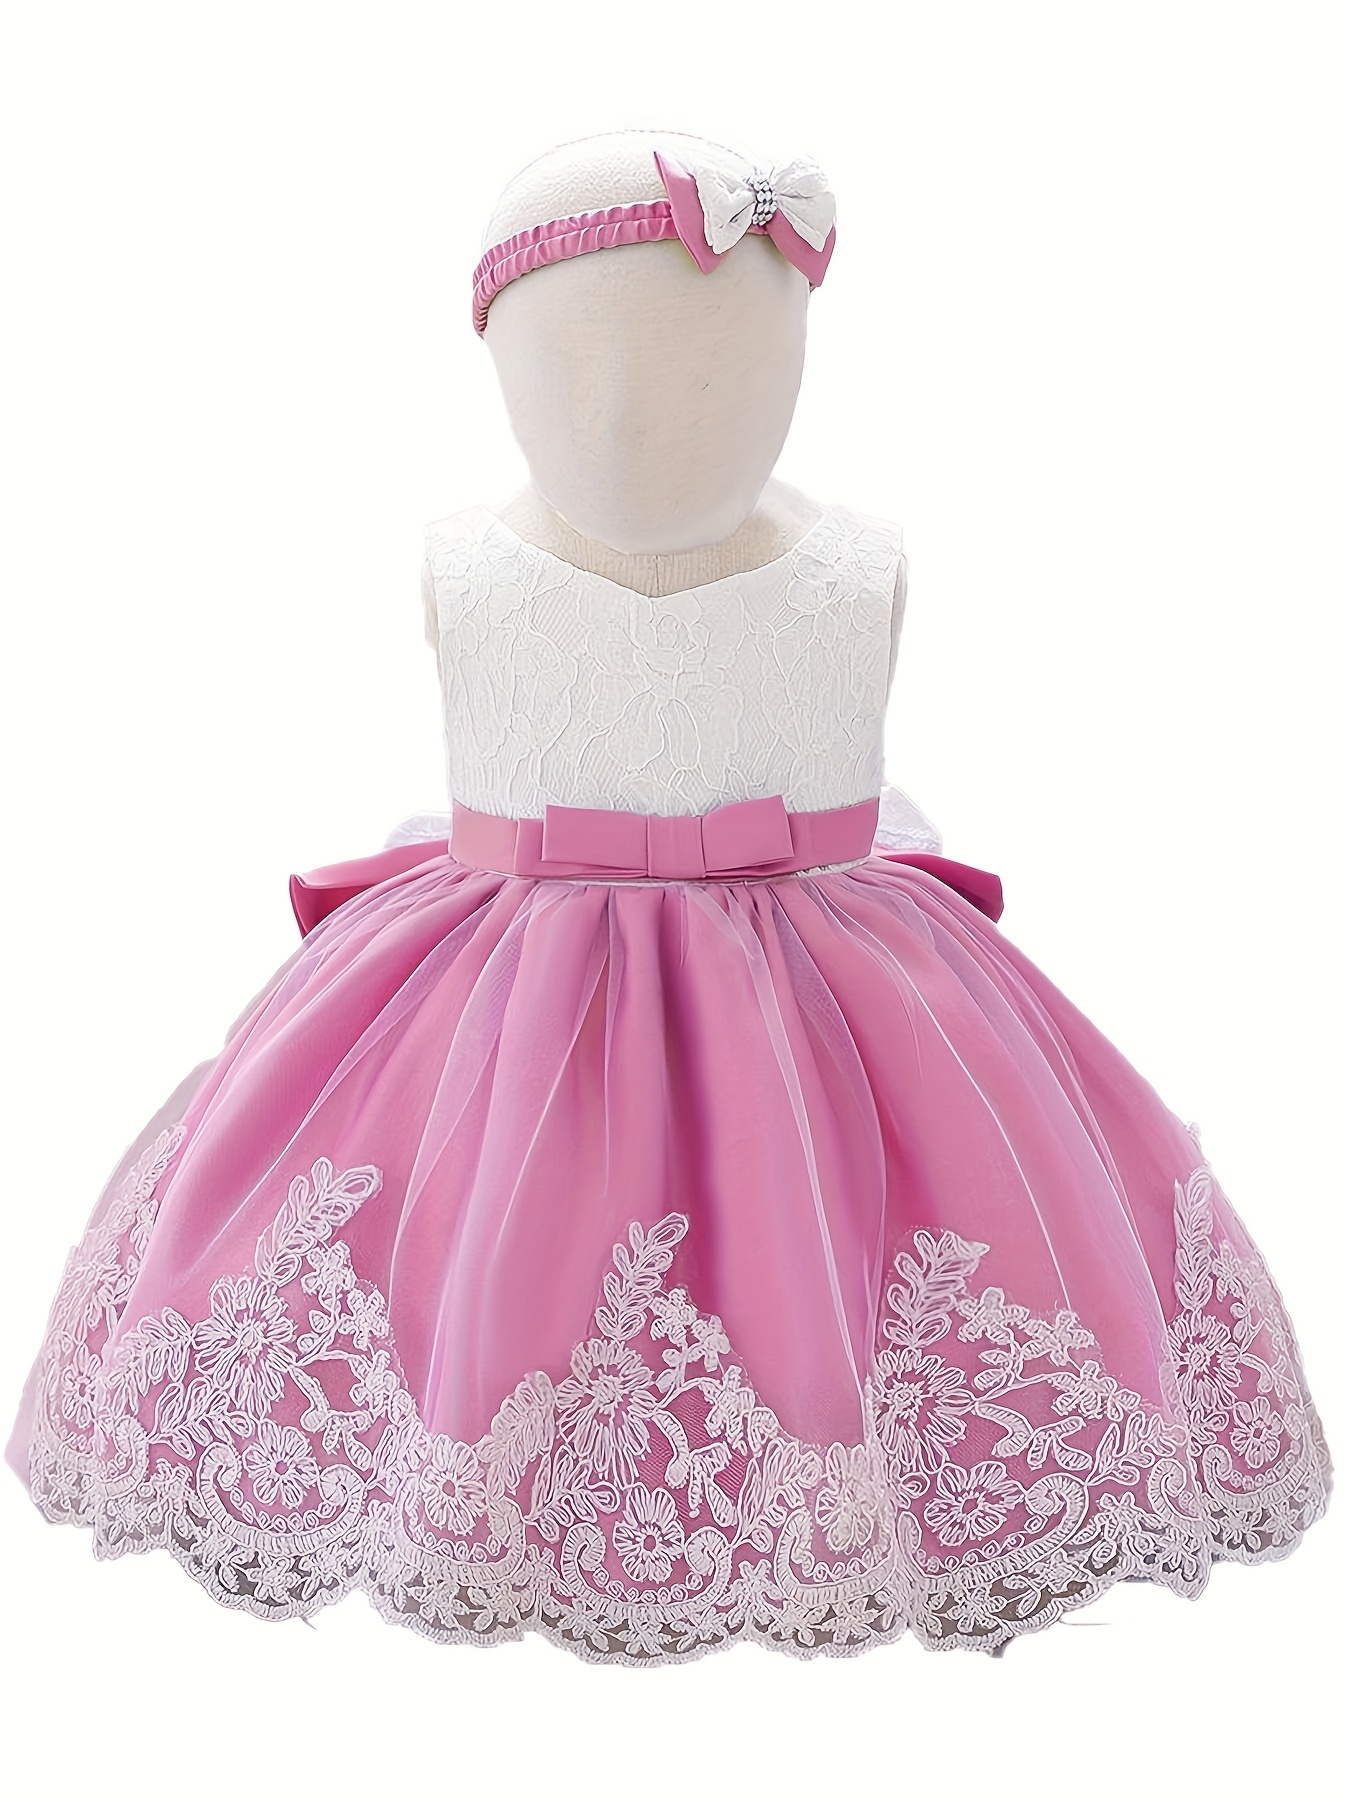 costume principessa bambina rosa e bianco